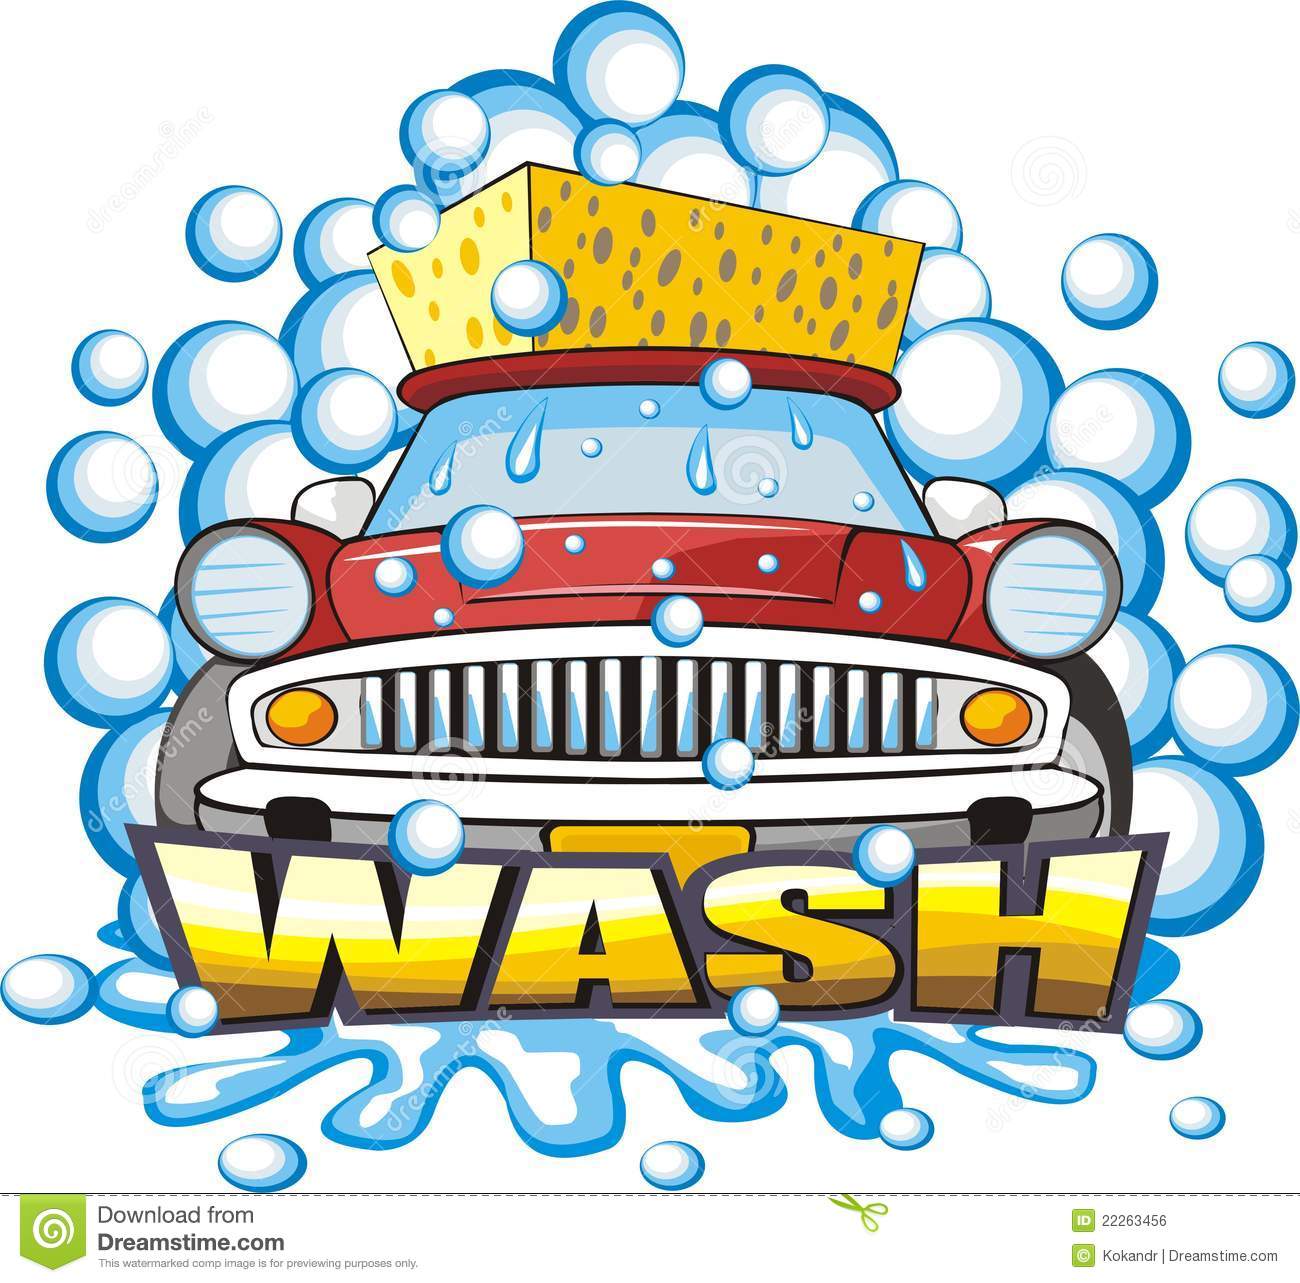 Car Washing Sign Royalty Free Stock Image   Image  22263456